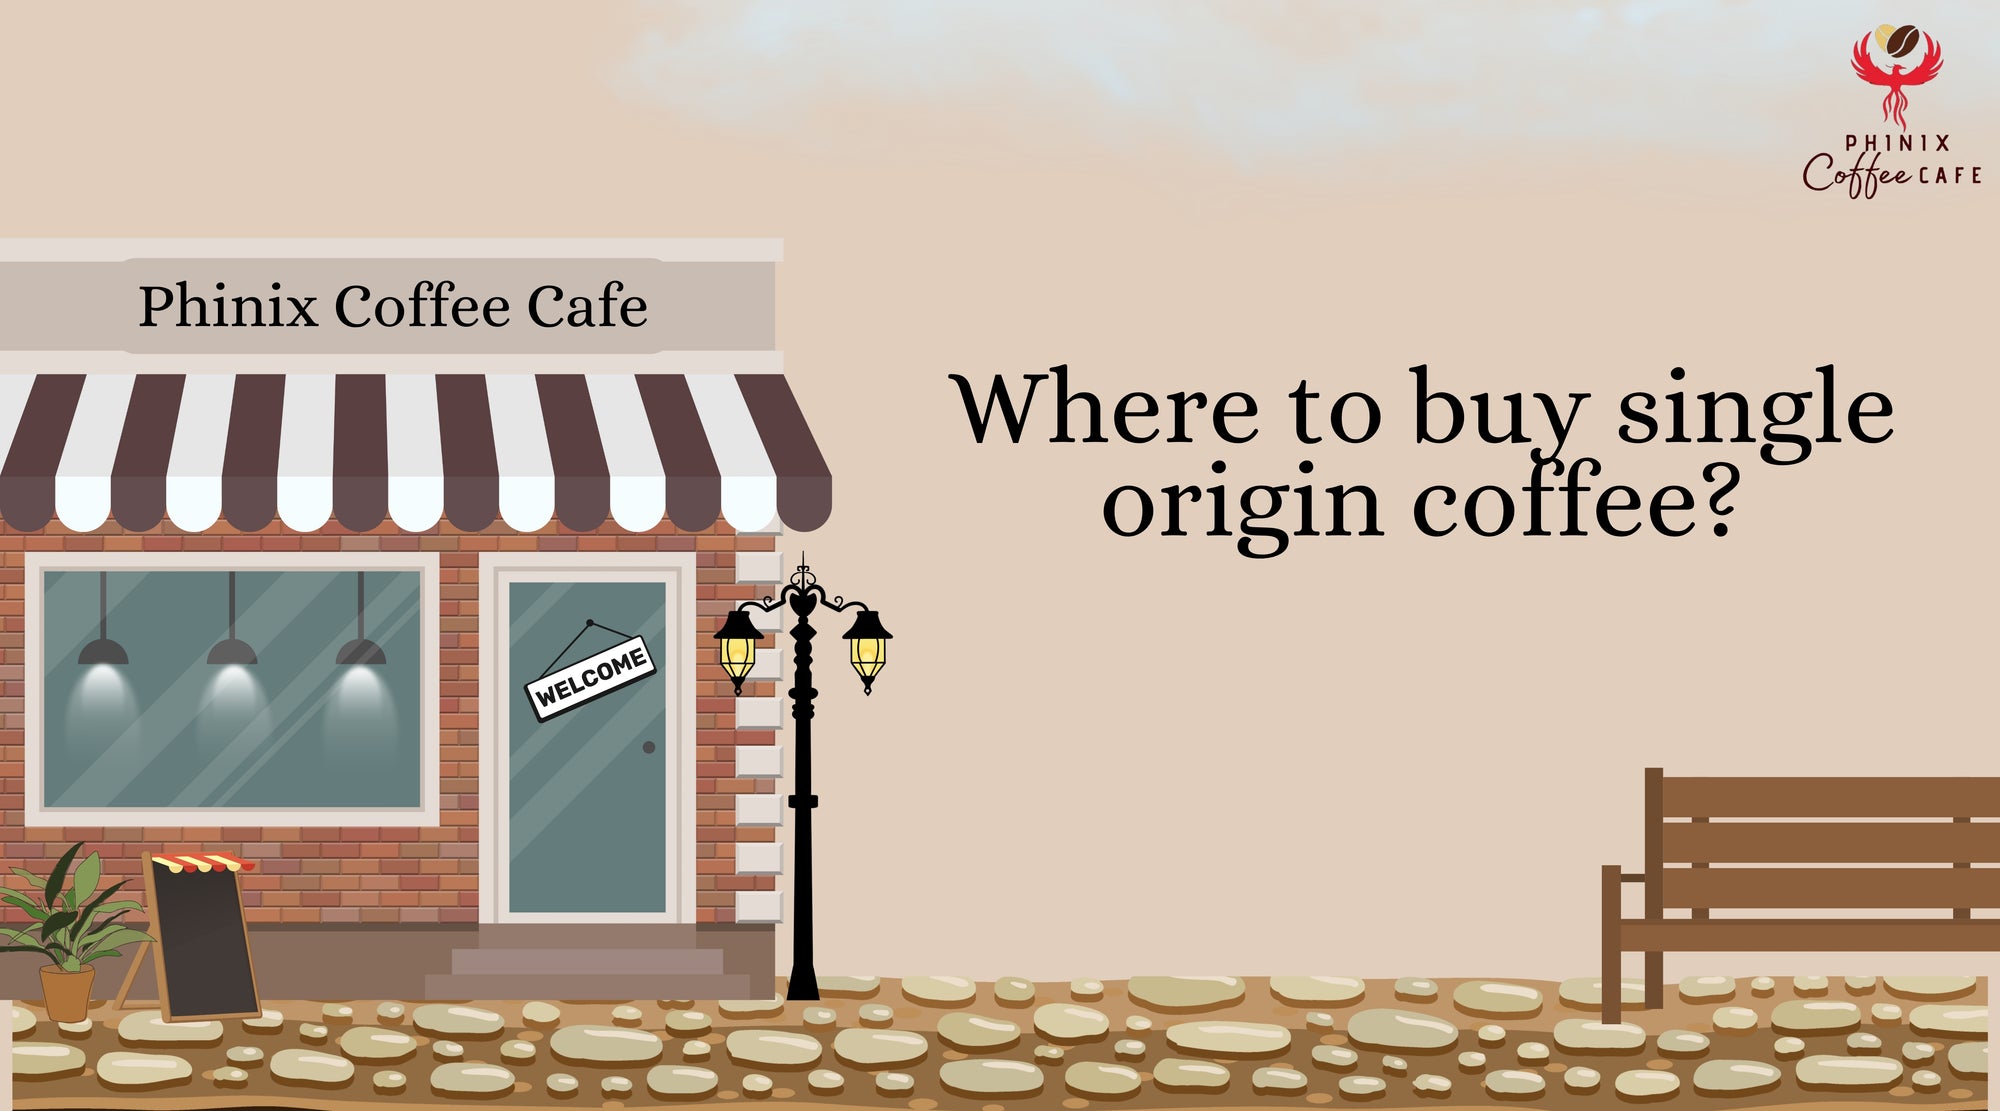 Where to buy single origin coffee